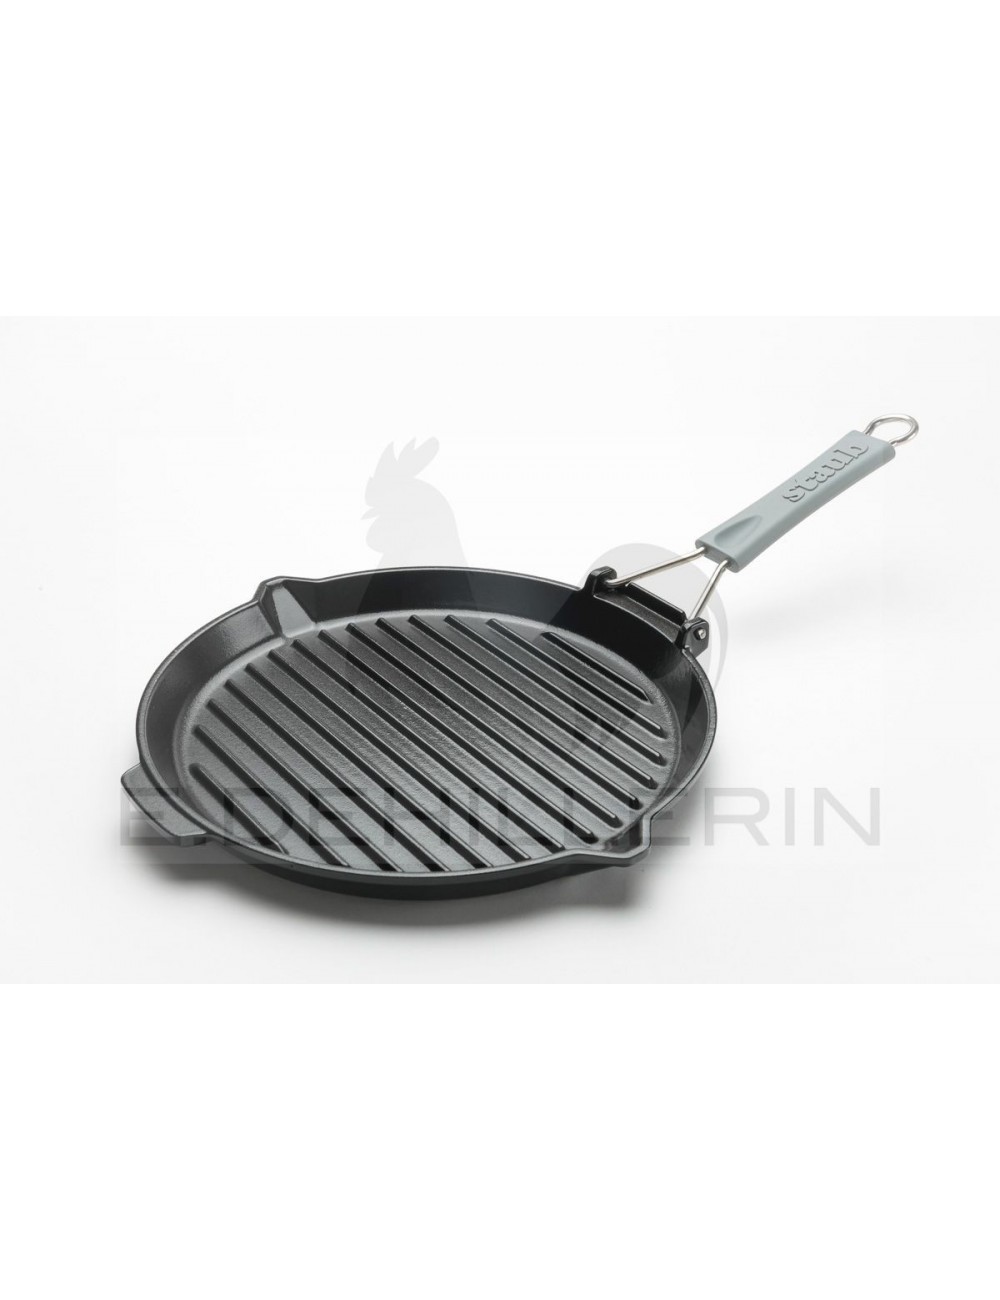 https://www.edehillerin.fr/828-large_default/grill-meat-cast-iron-round-diameter-27-staub.jpg